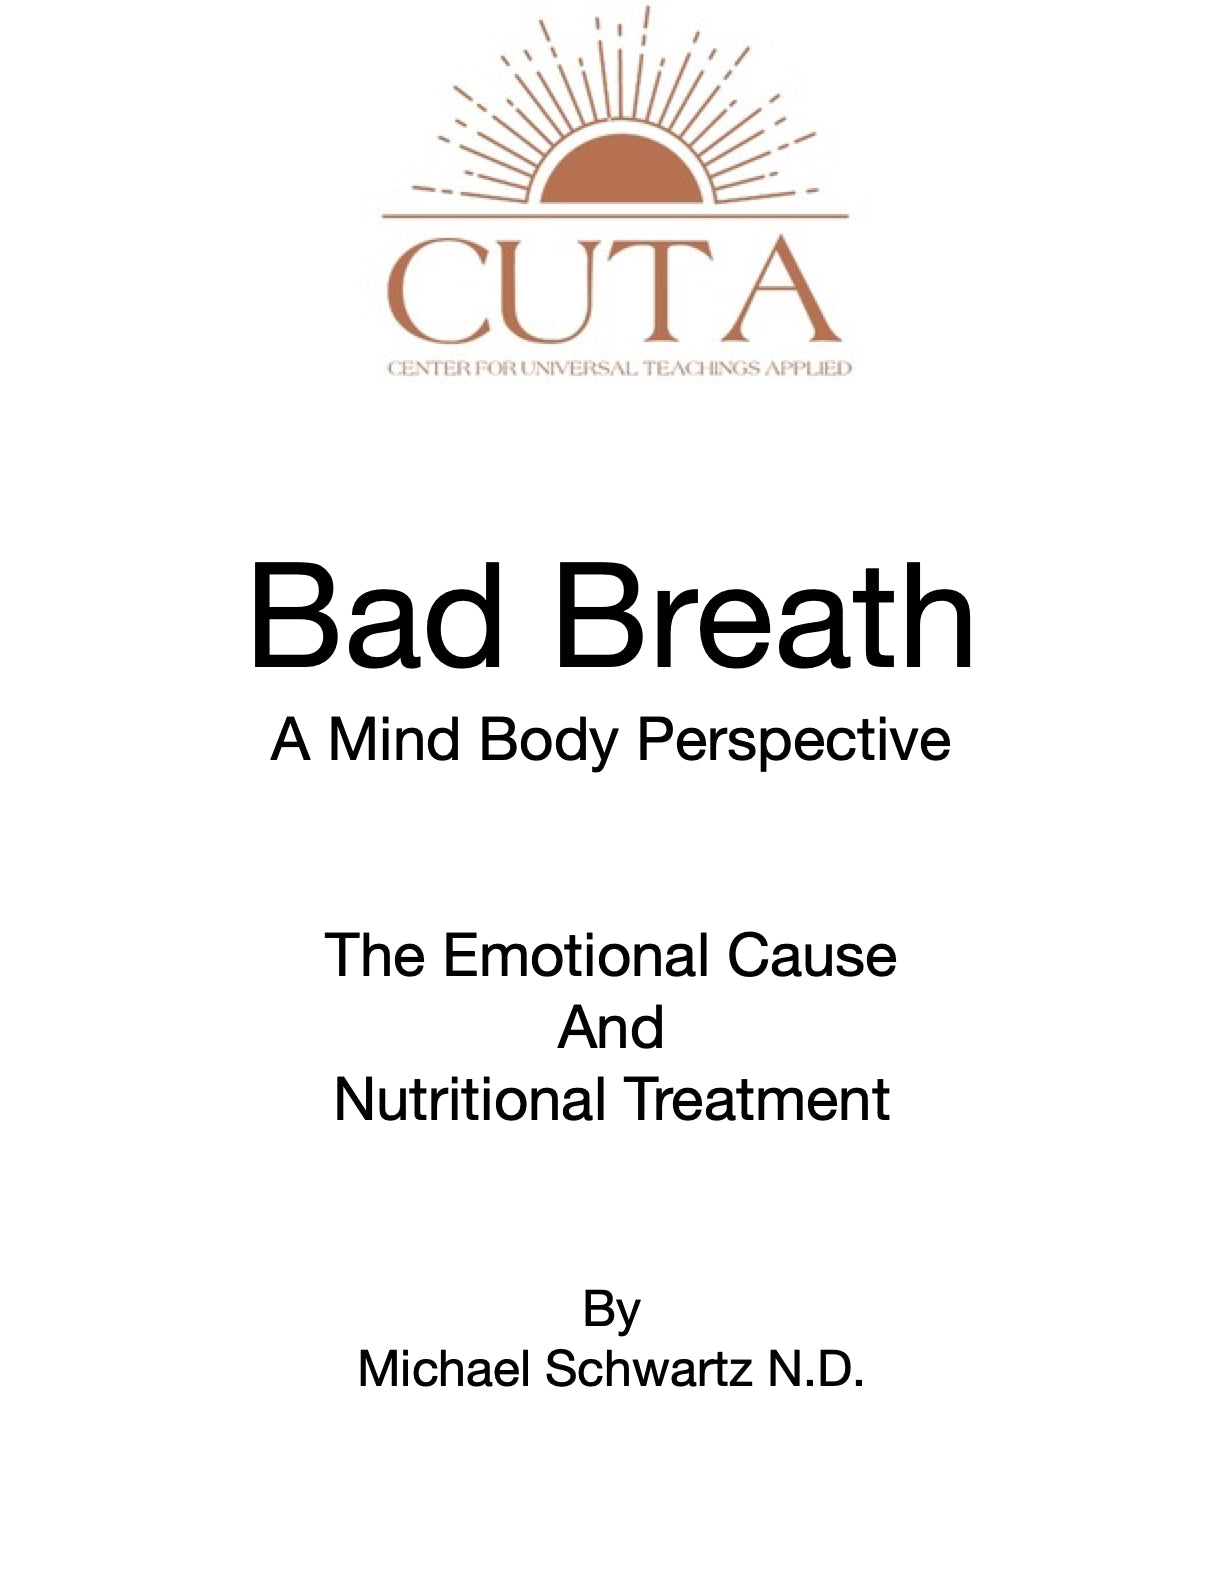 Bad Breath Booklet